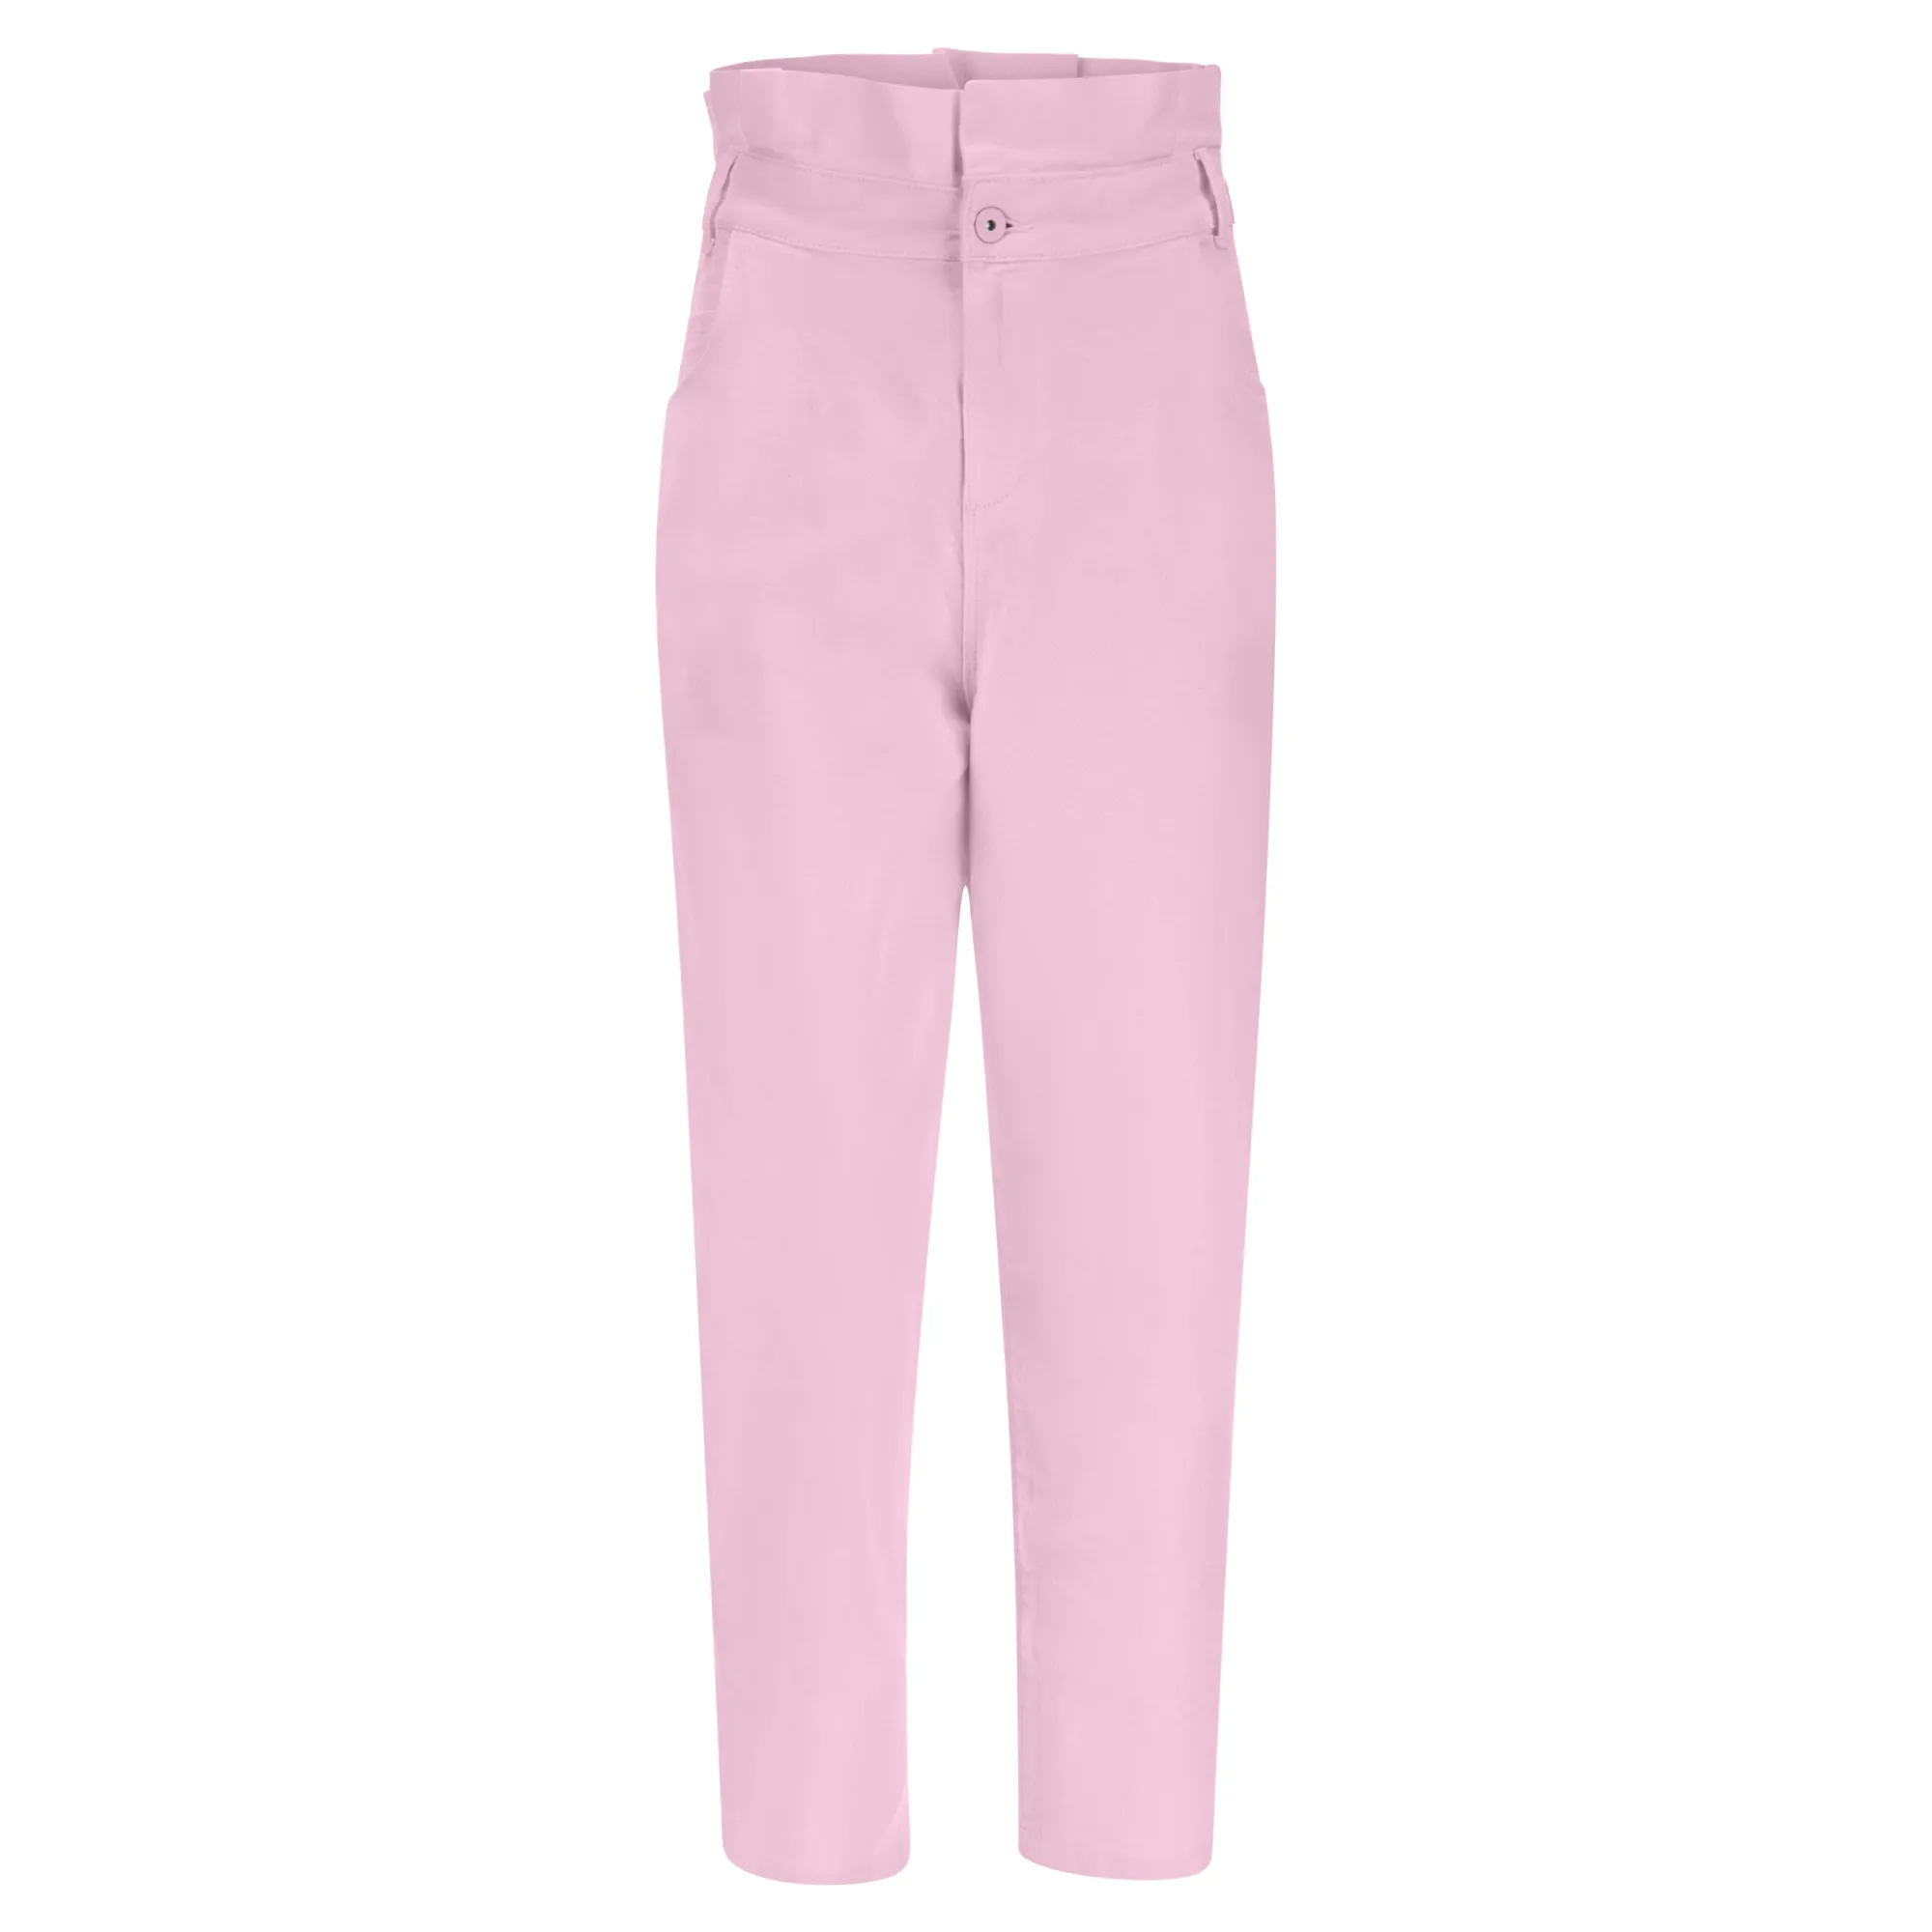 Freddy Damen Carrot Jeans - Geraffter Saum - Garment Dyed  - Direct Dyed - Pink - P89X